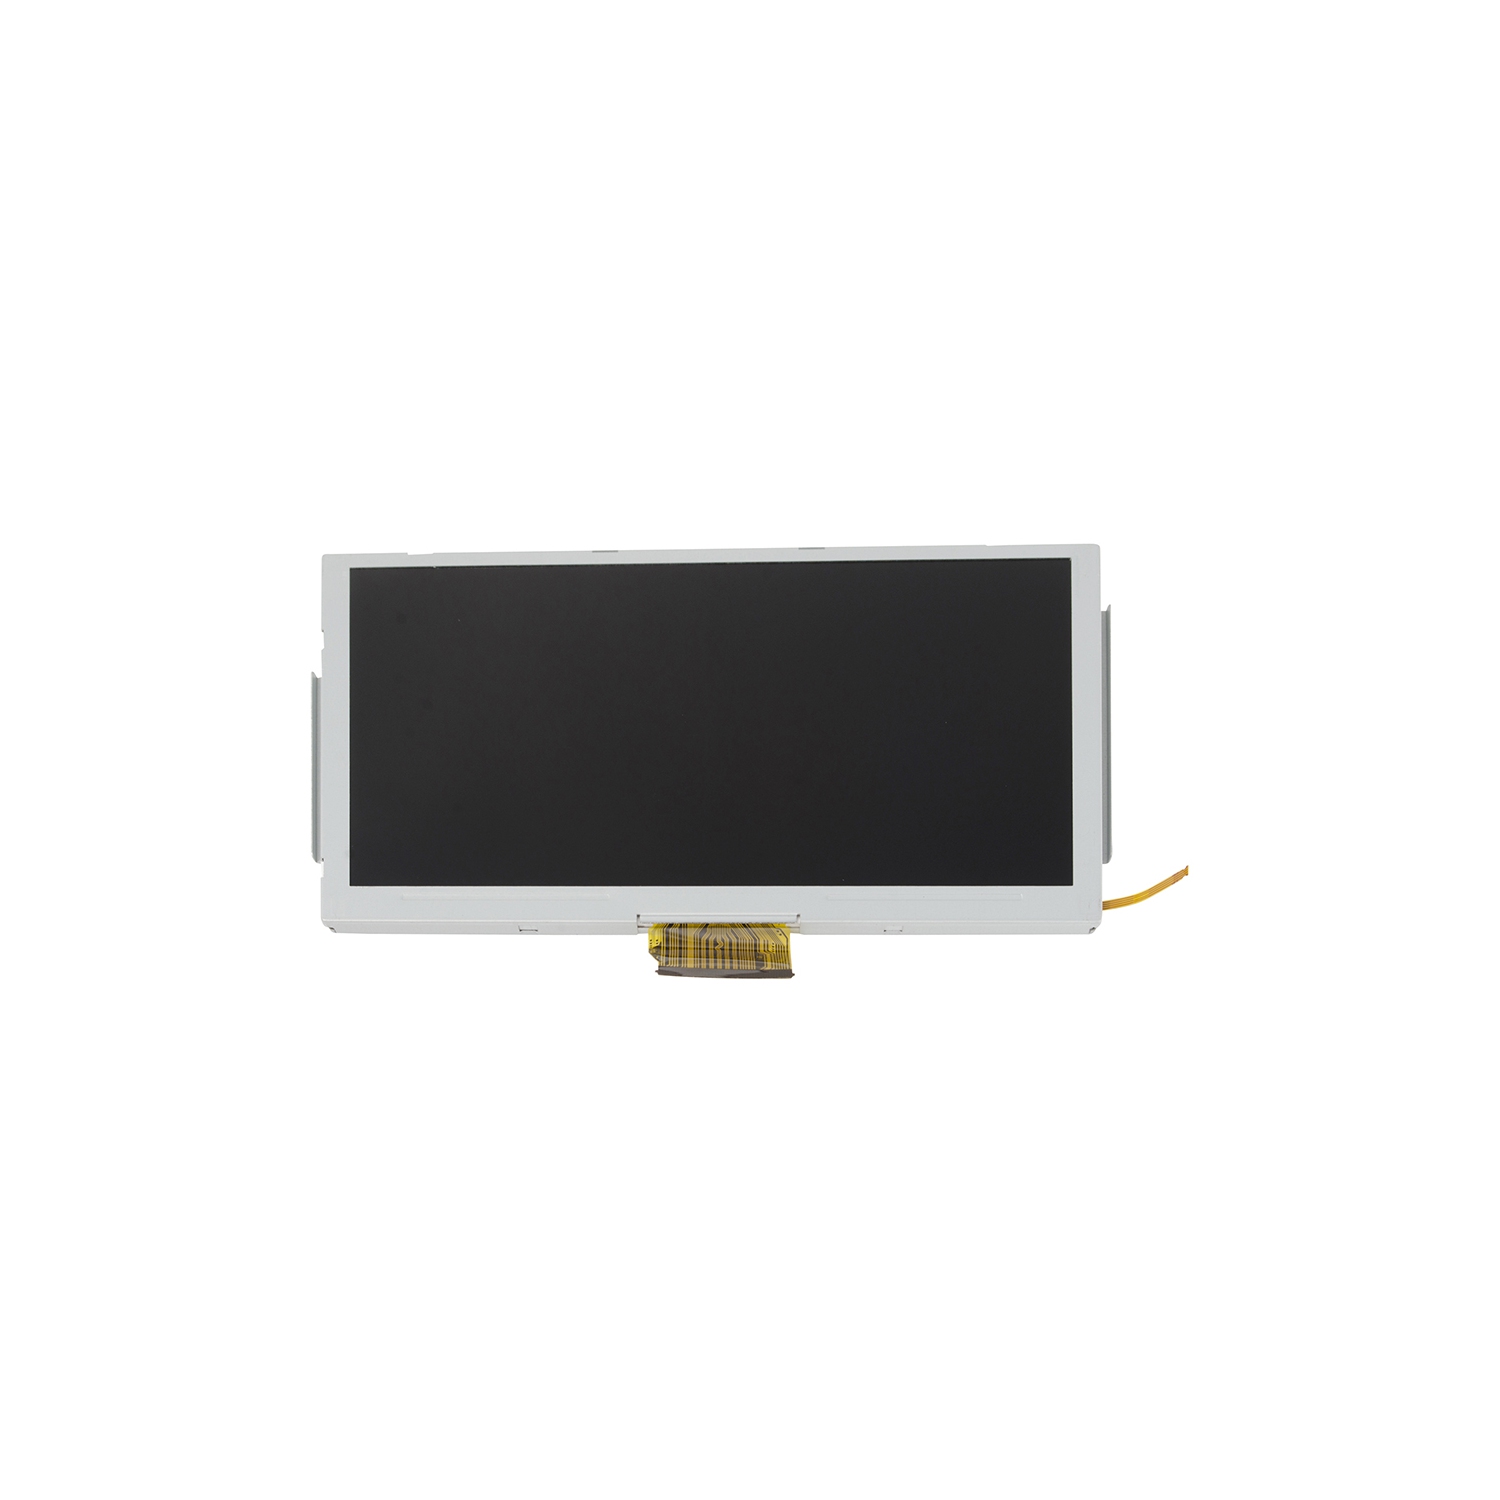 Nintendo Wii U Gamepad LCD Replacement